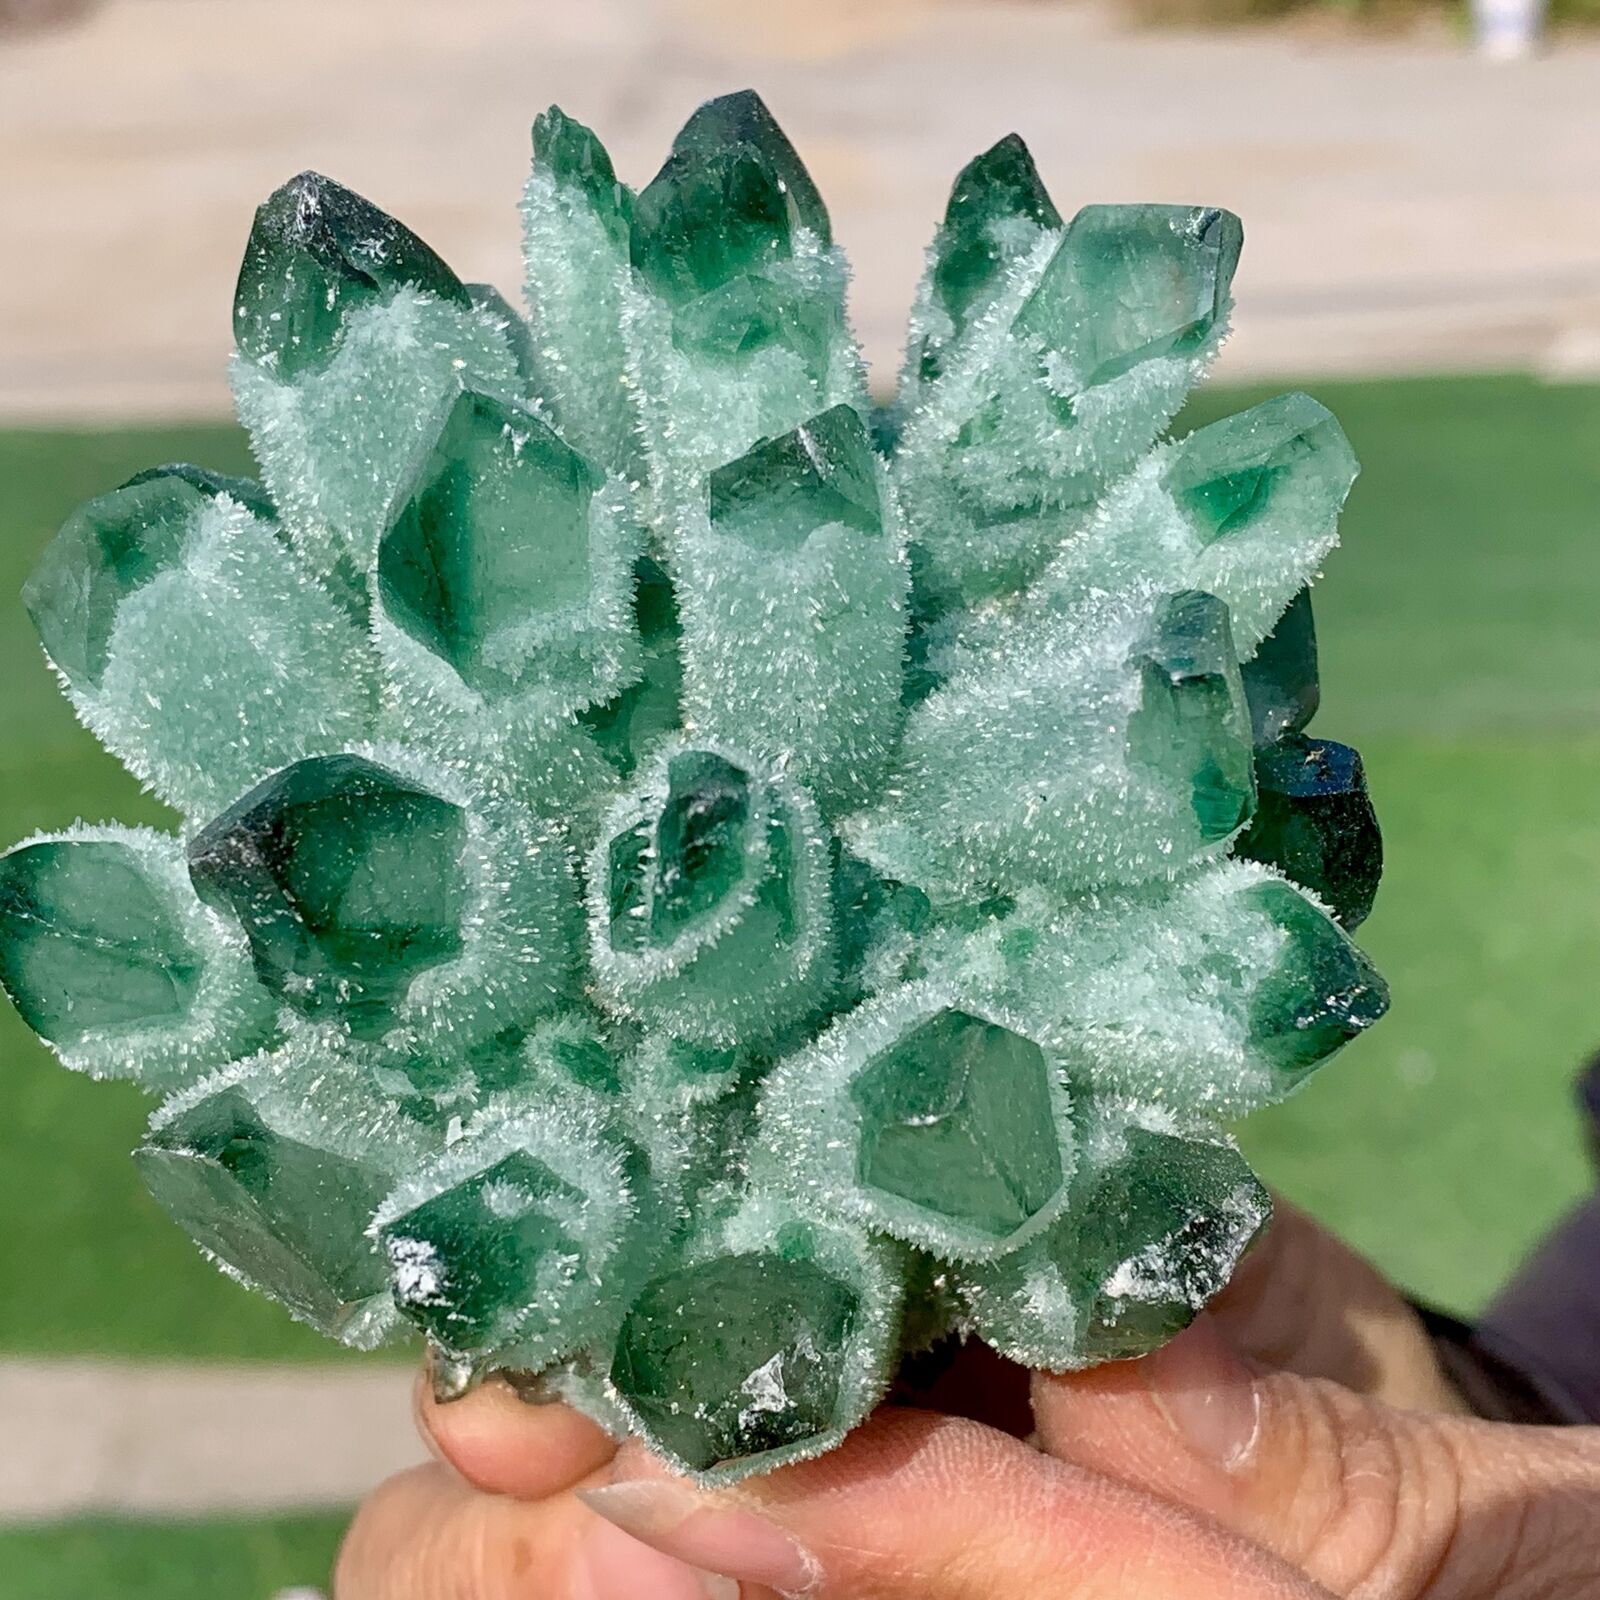 478G Newly discovered green phantom quartz crystal cluster minerals